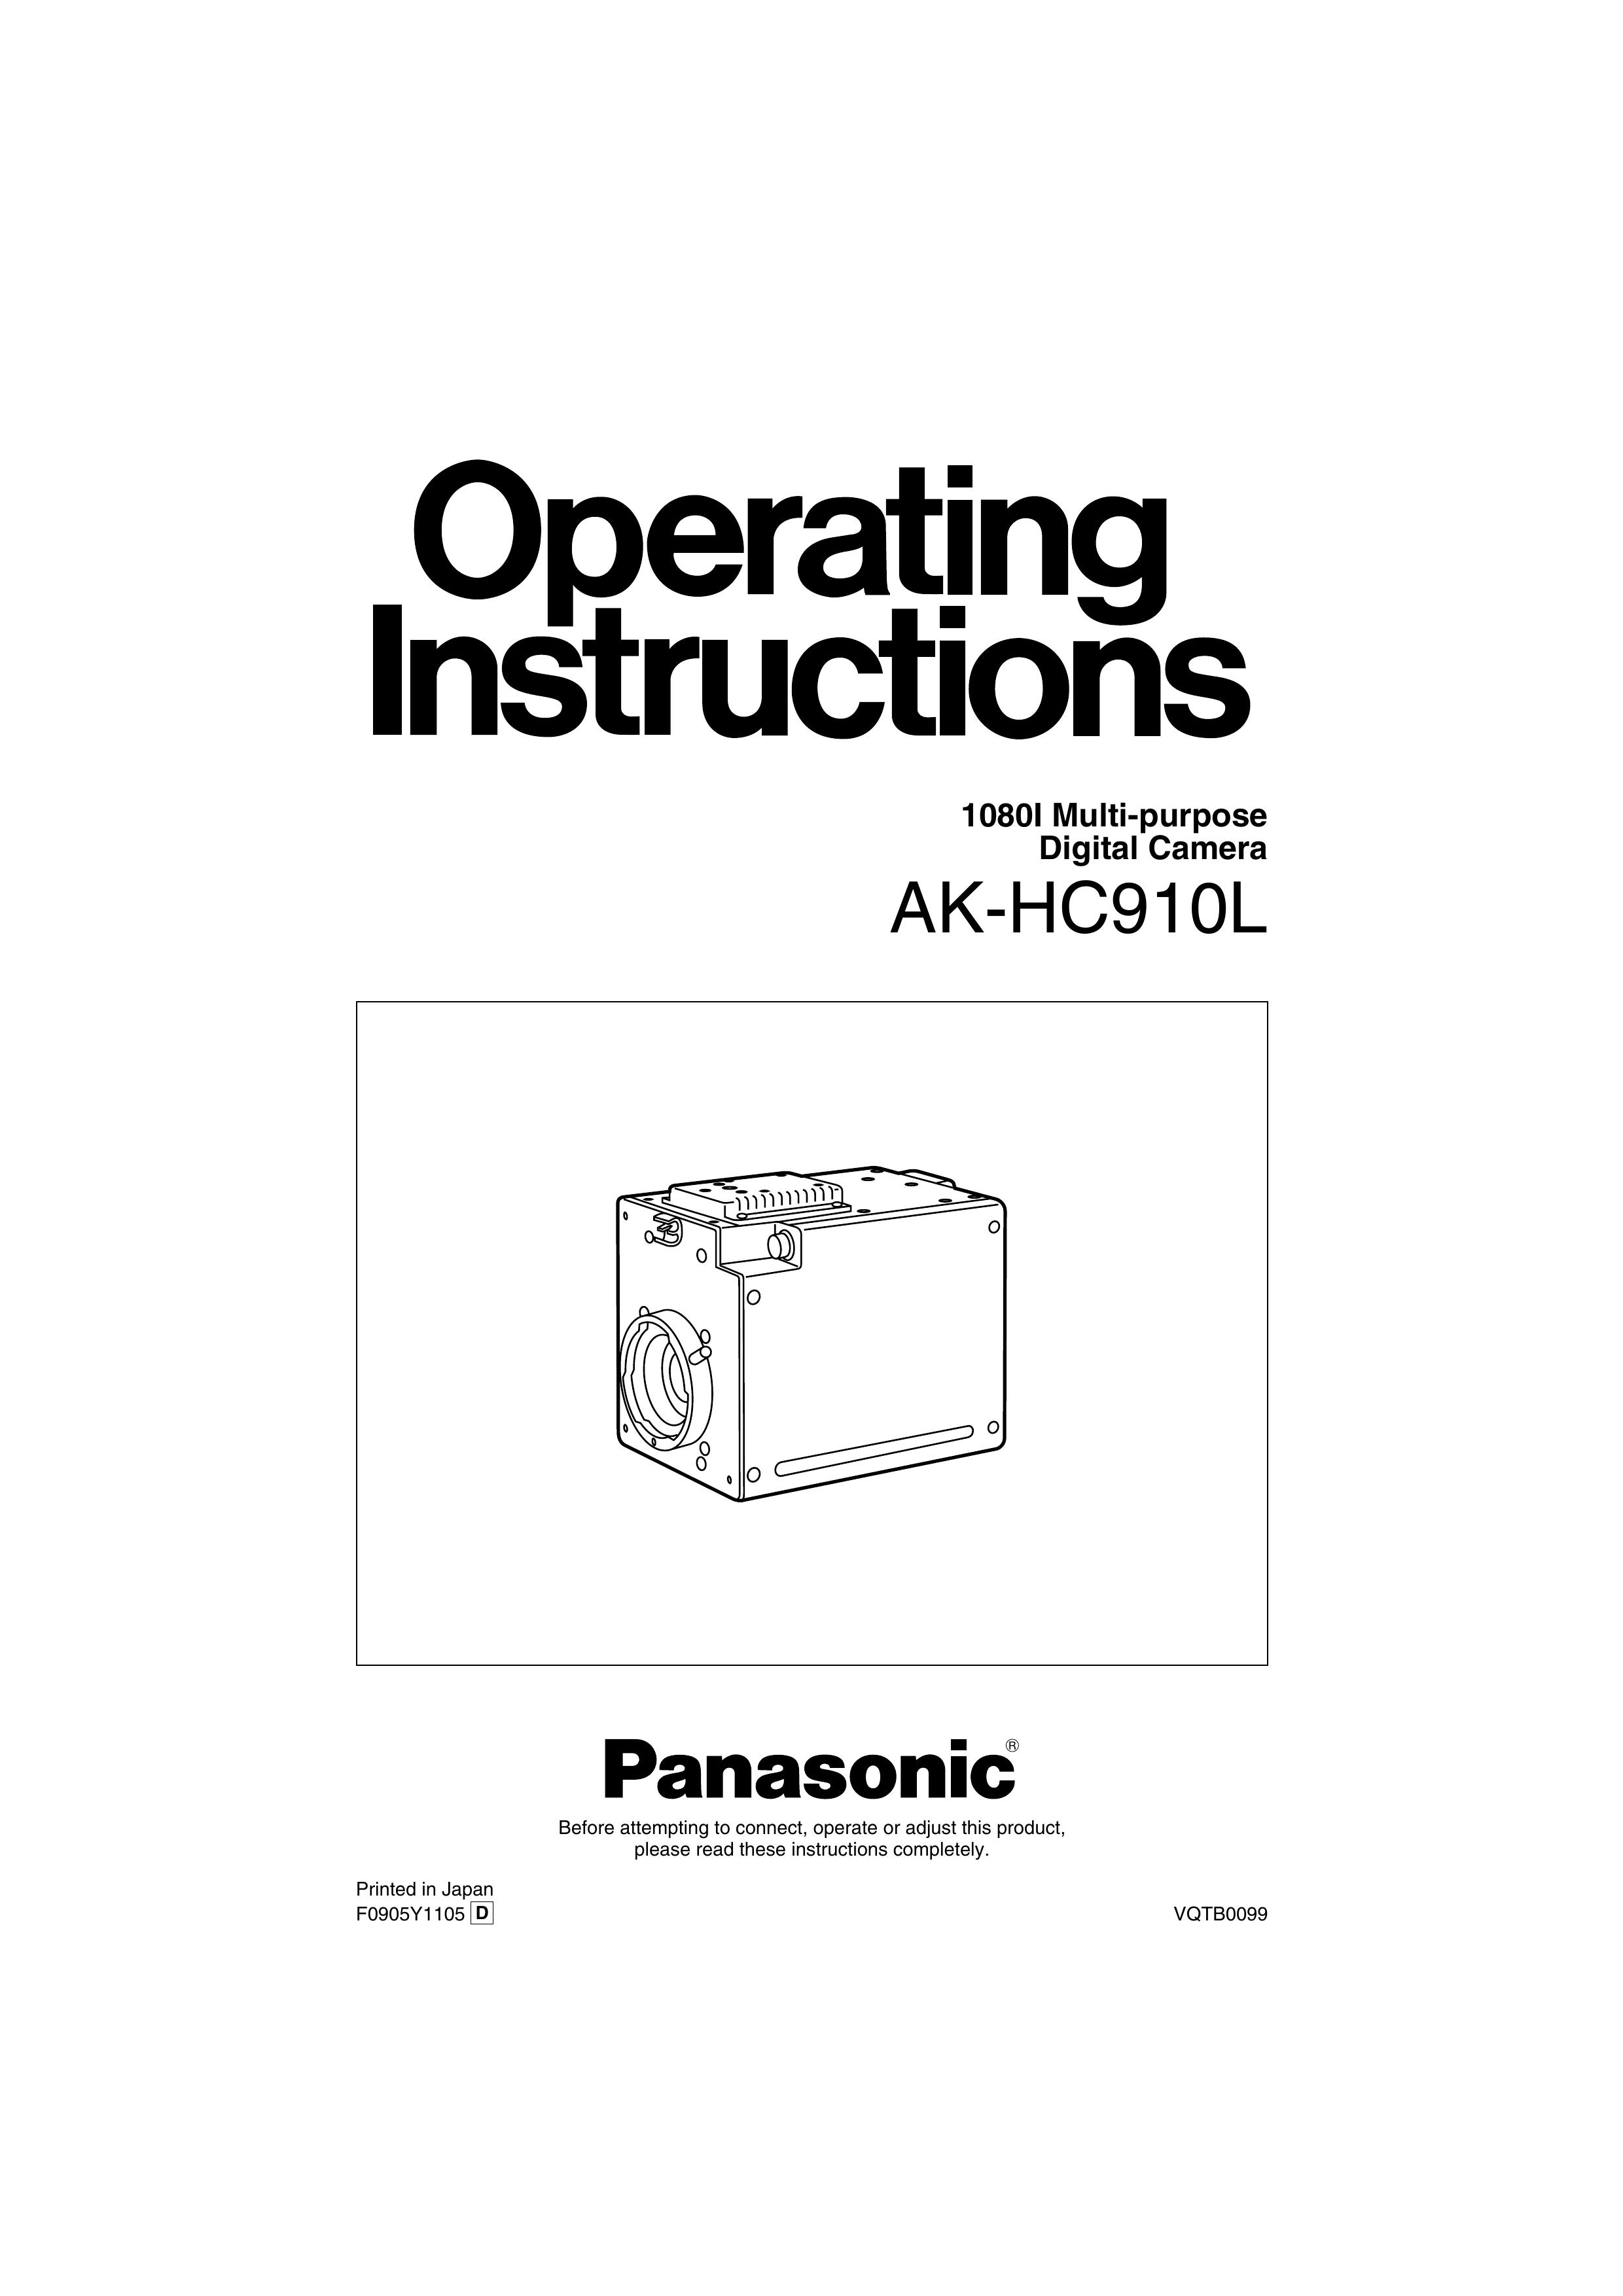 Panasonic AK-HC910L Digital Camera User Manual